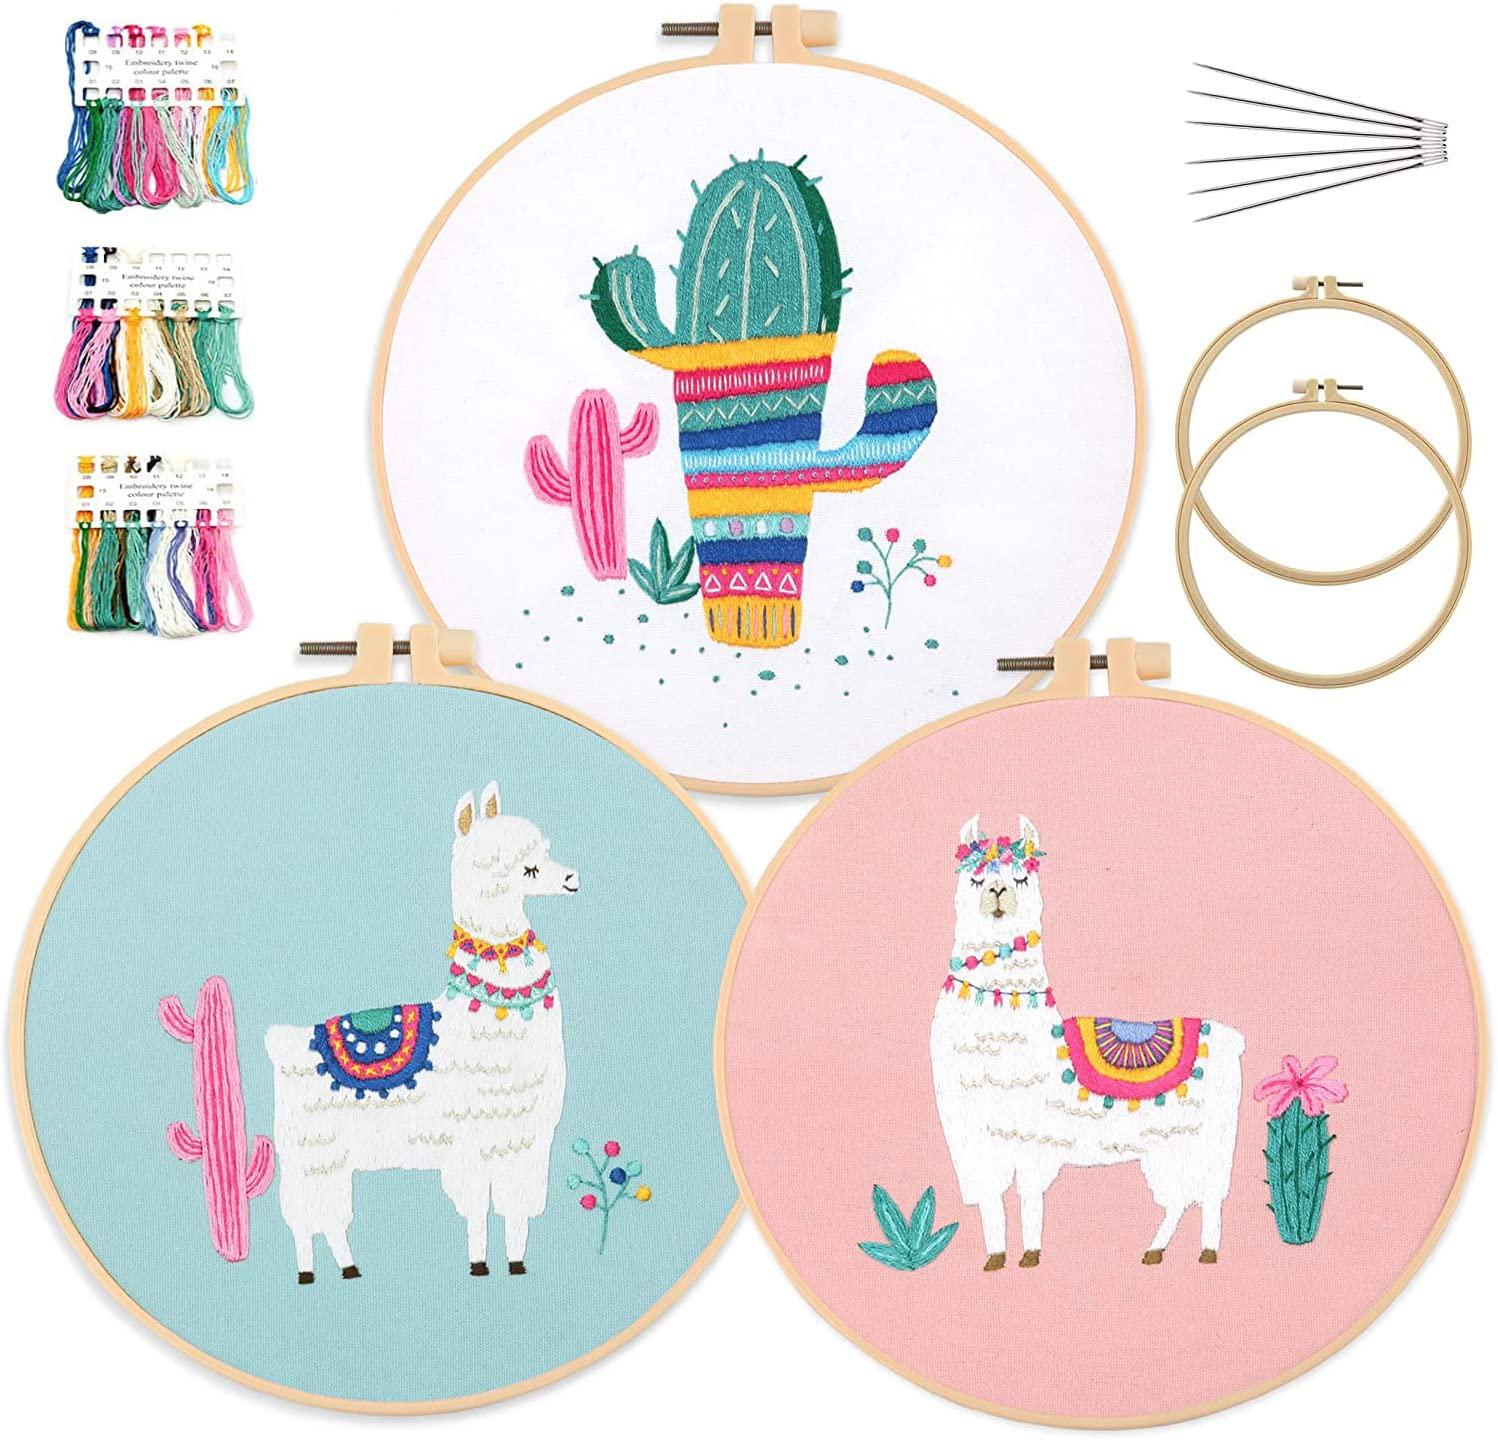 MINGHAM, Mingham Embroidery Kit with Flossing Needles for Beginners Full Range Kits Alpaca Cactus Cross Stitch Starter Kit